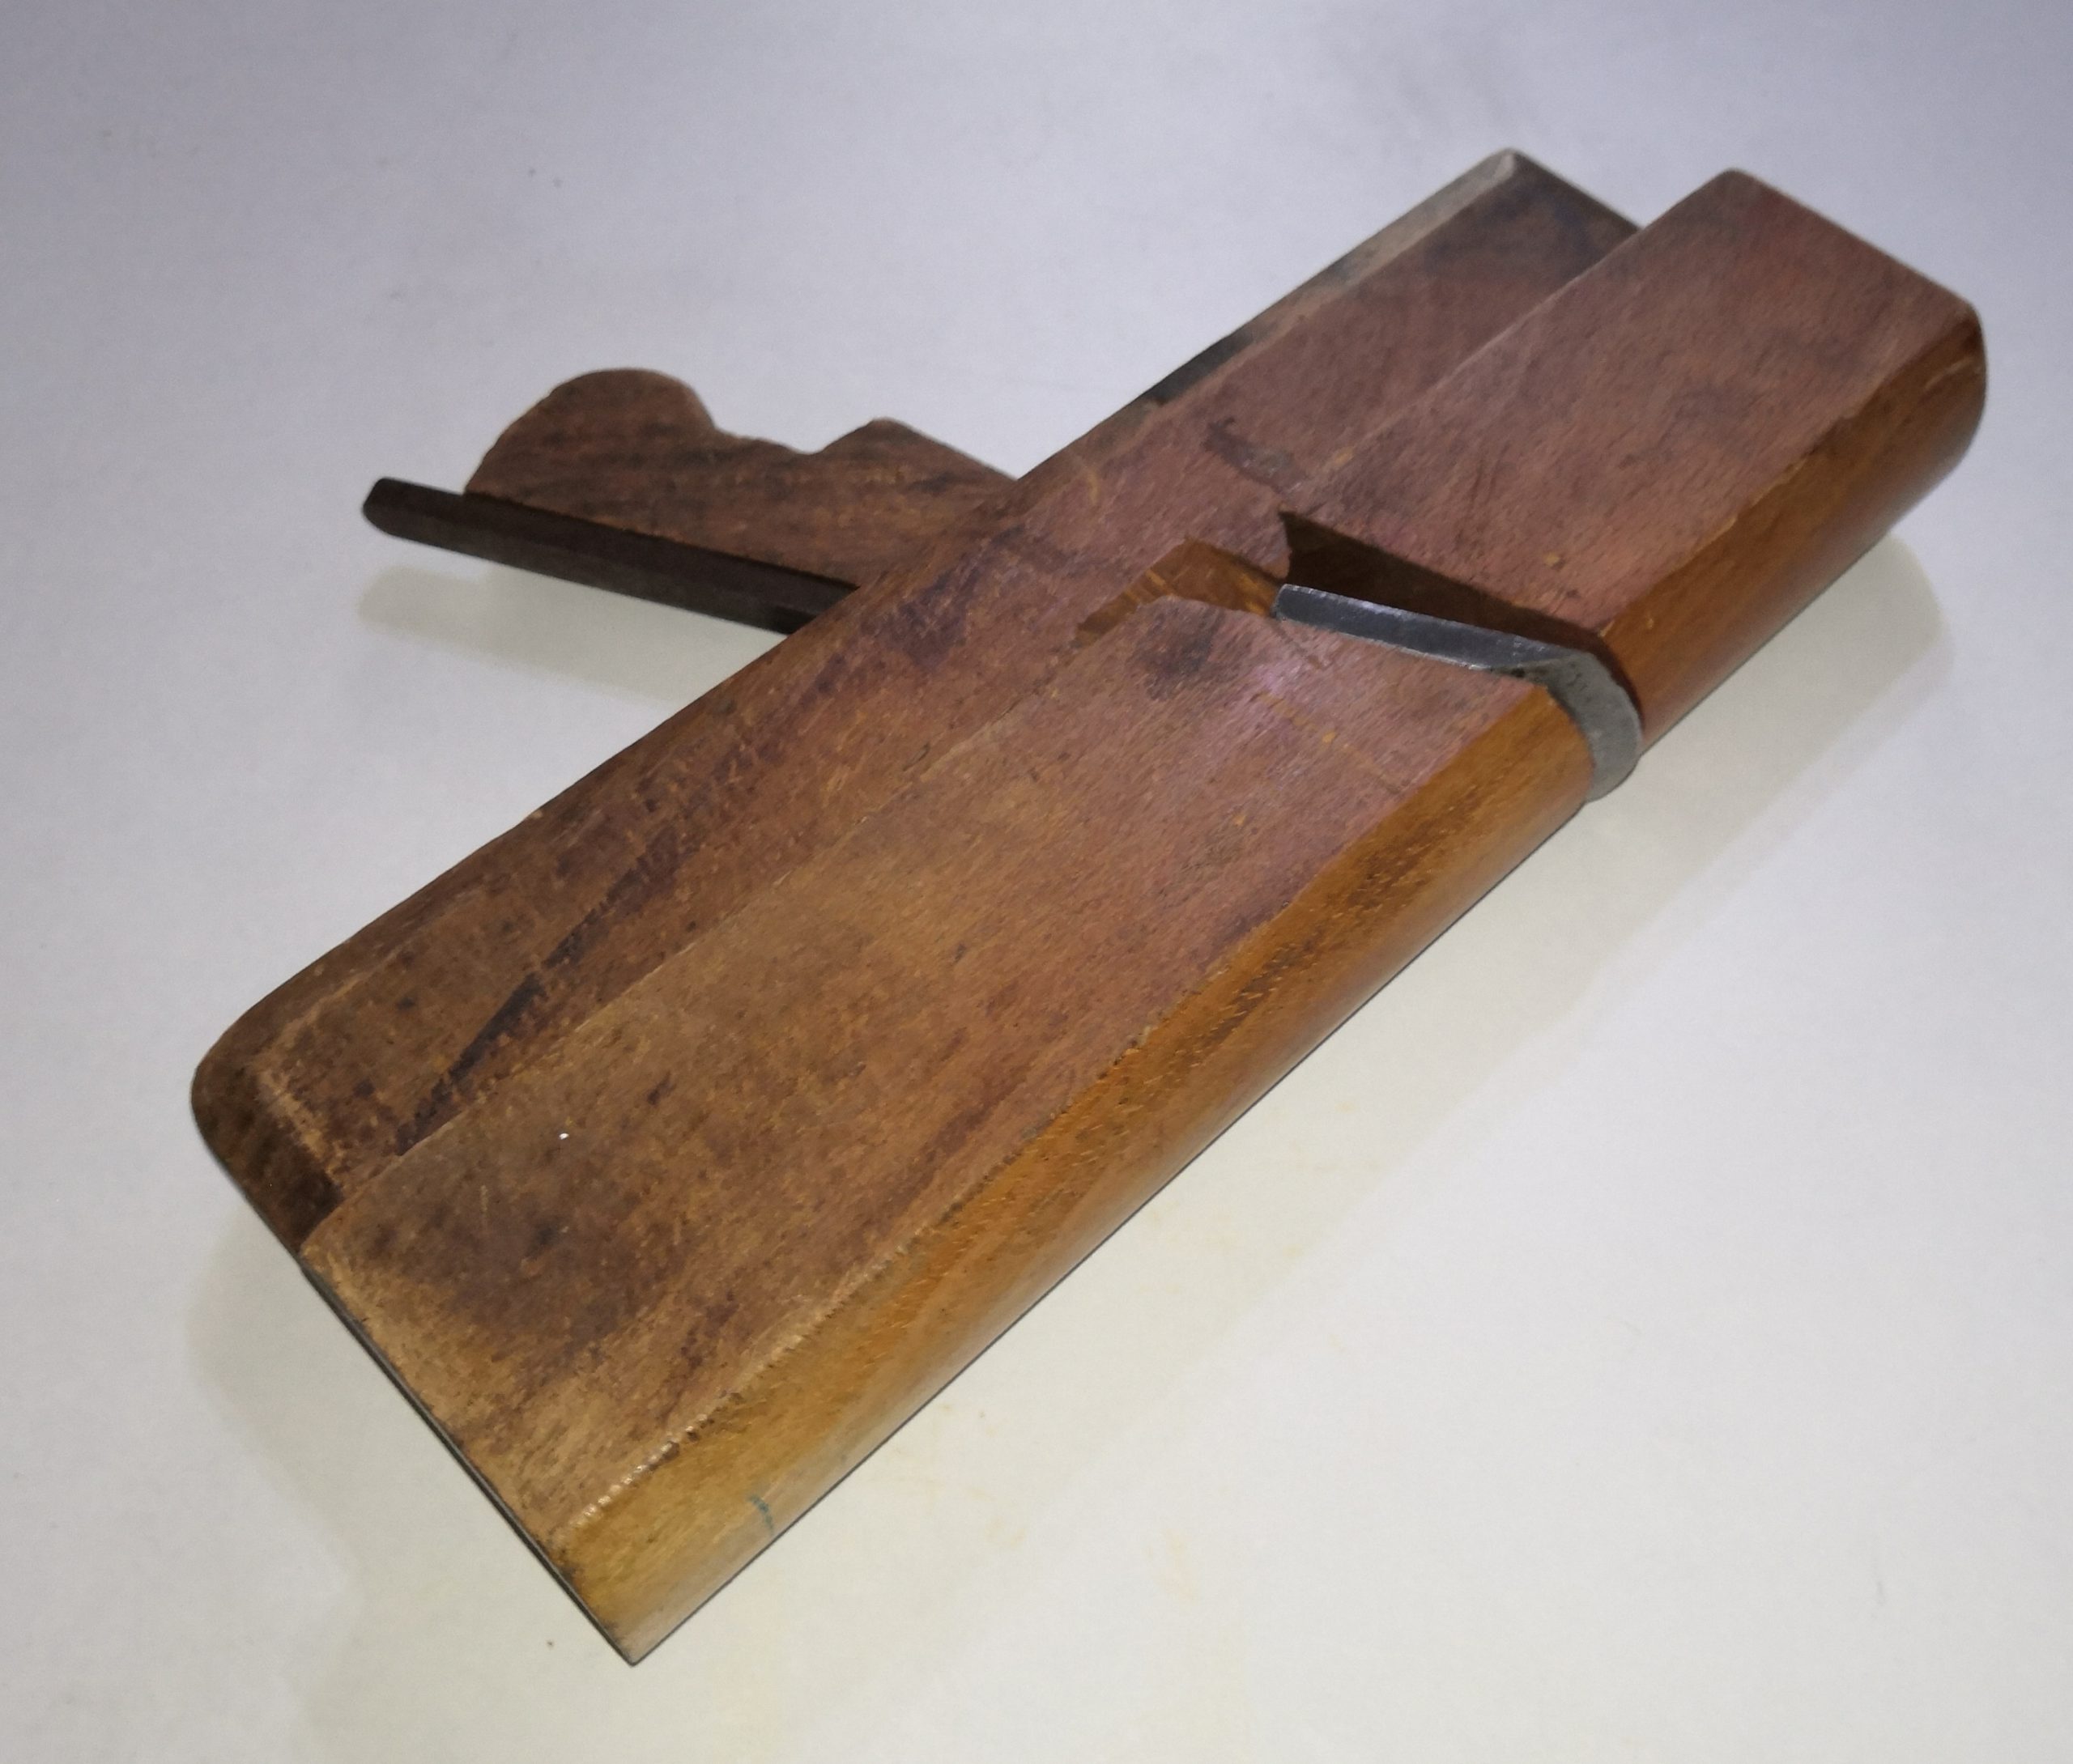 Vintage Woodworking Tools